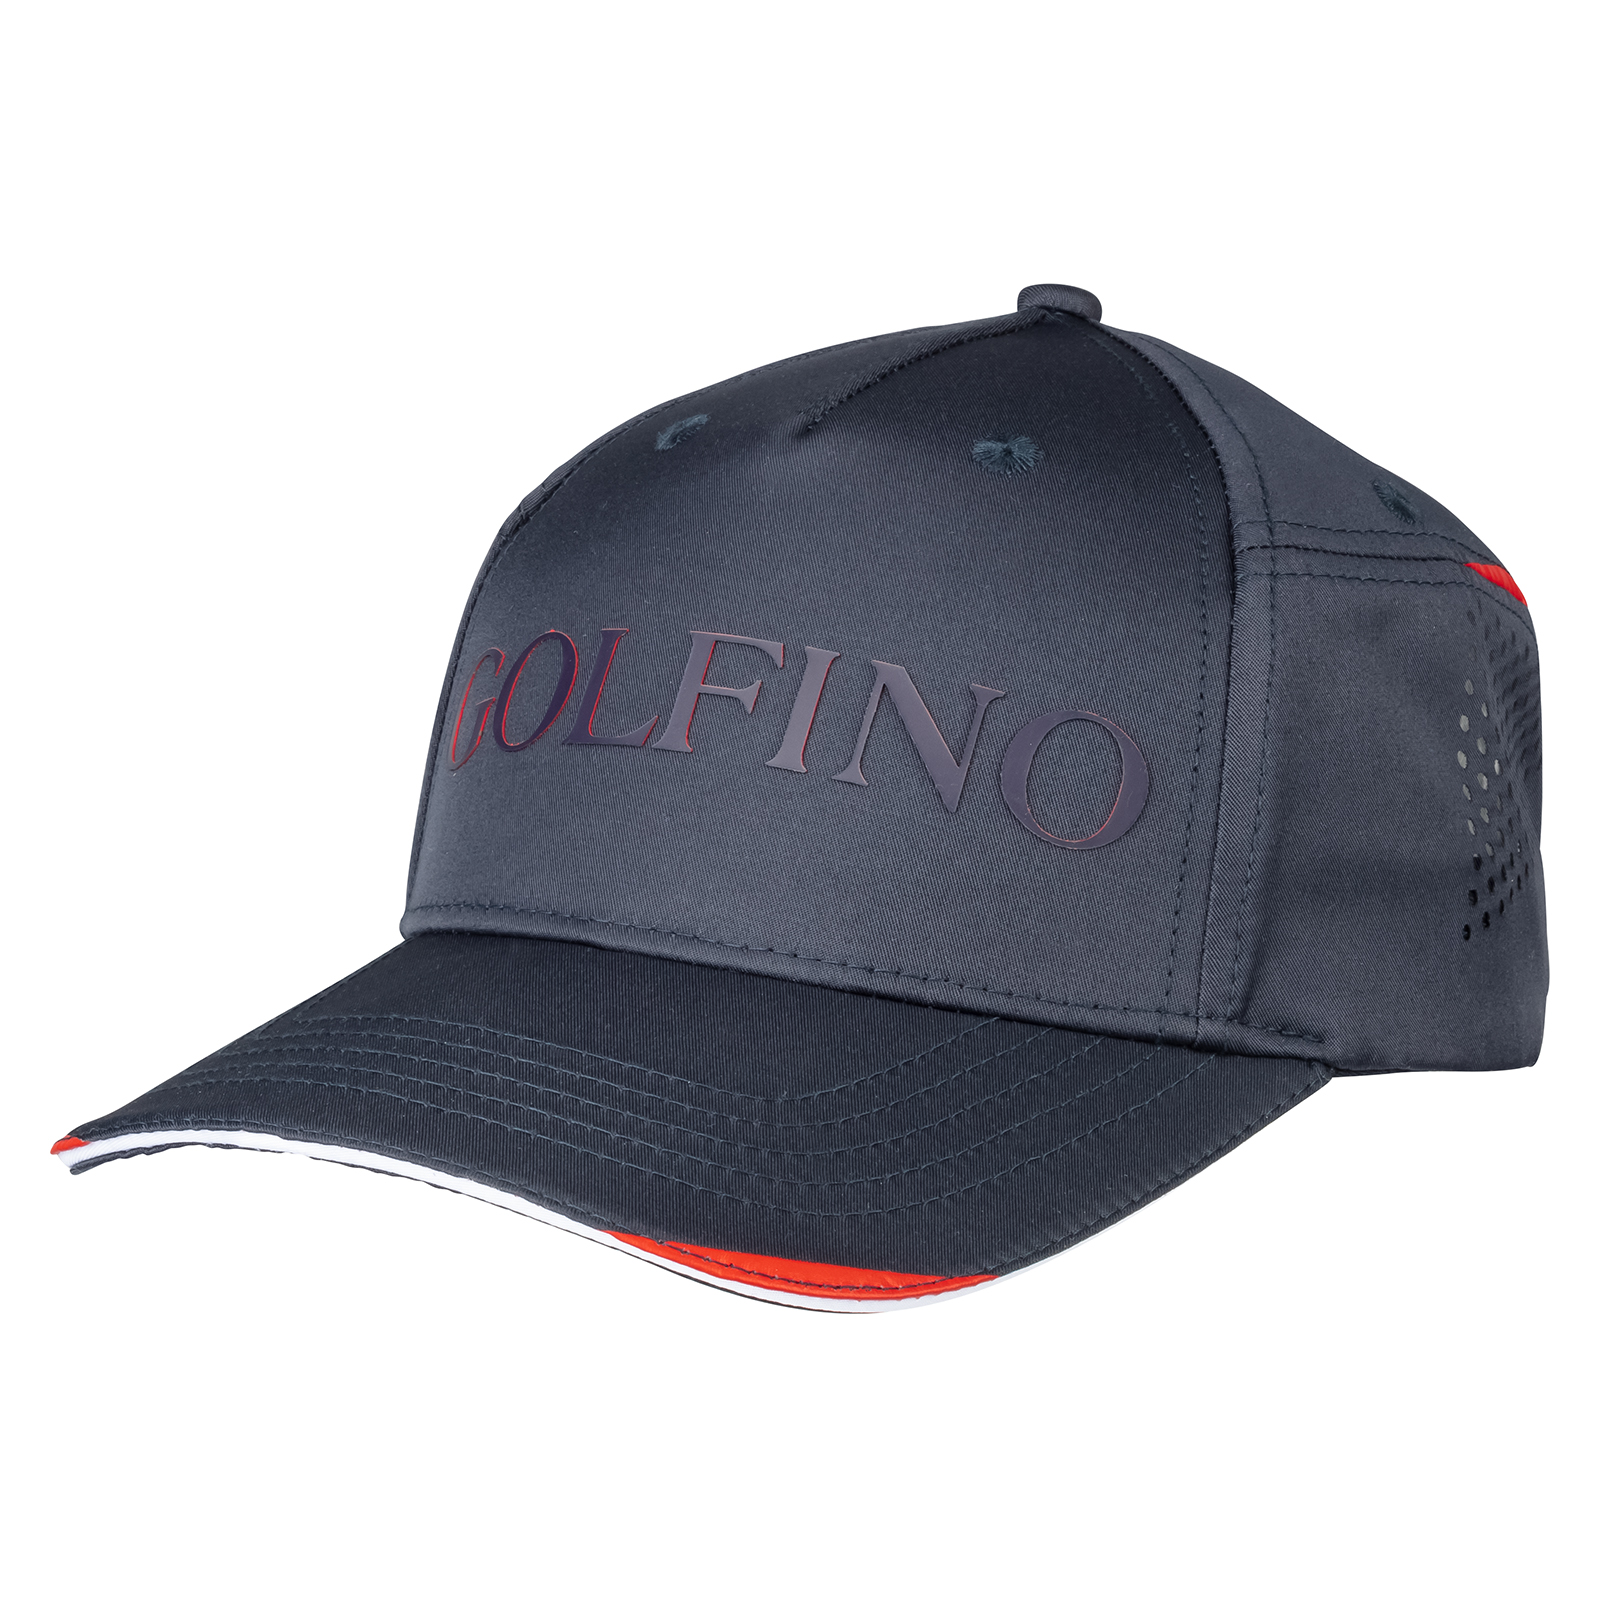 Men's performance golf cap with 3D printed logo 